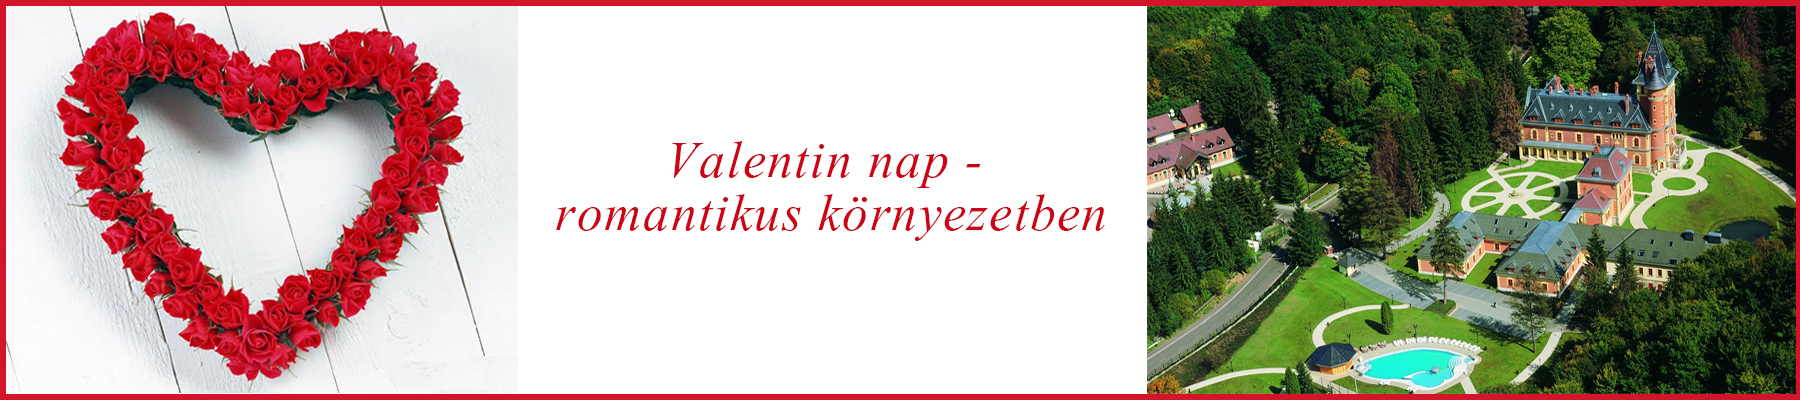 valentin-nap2